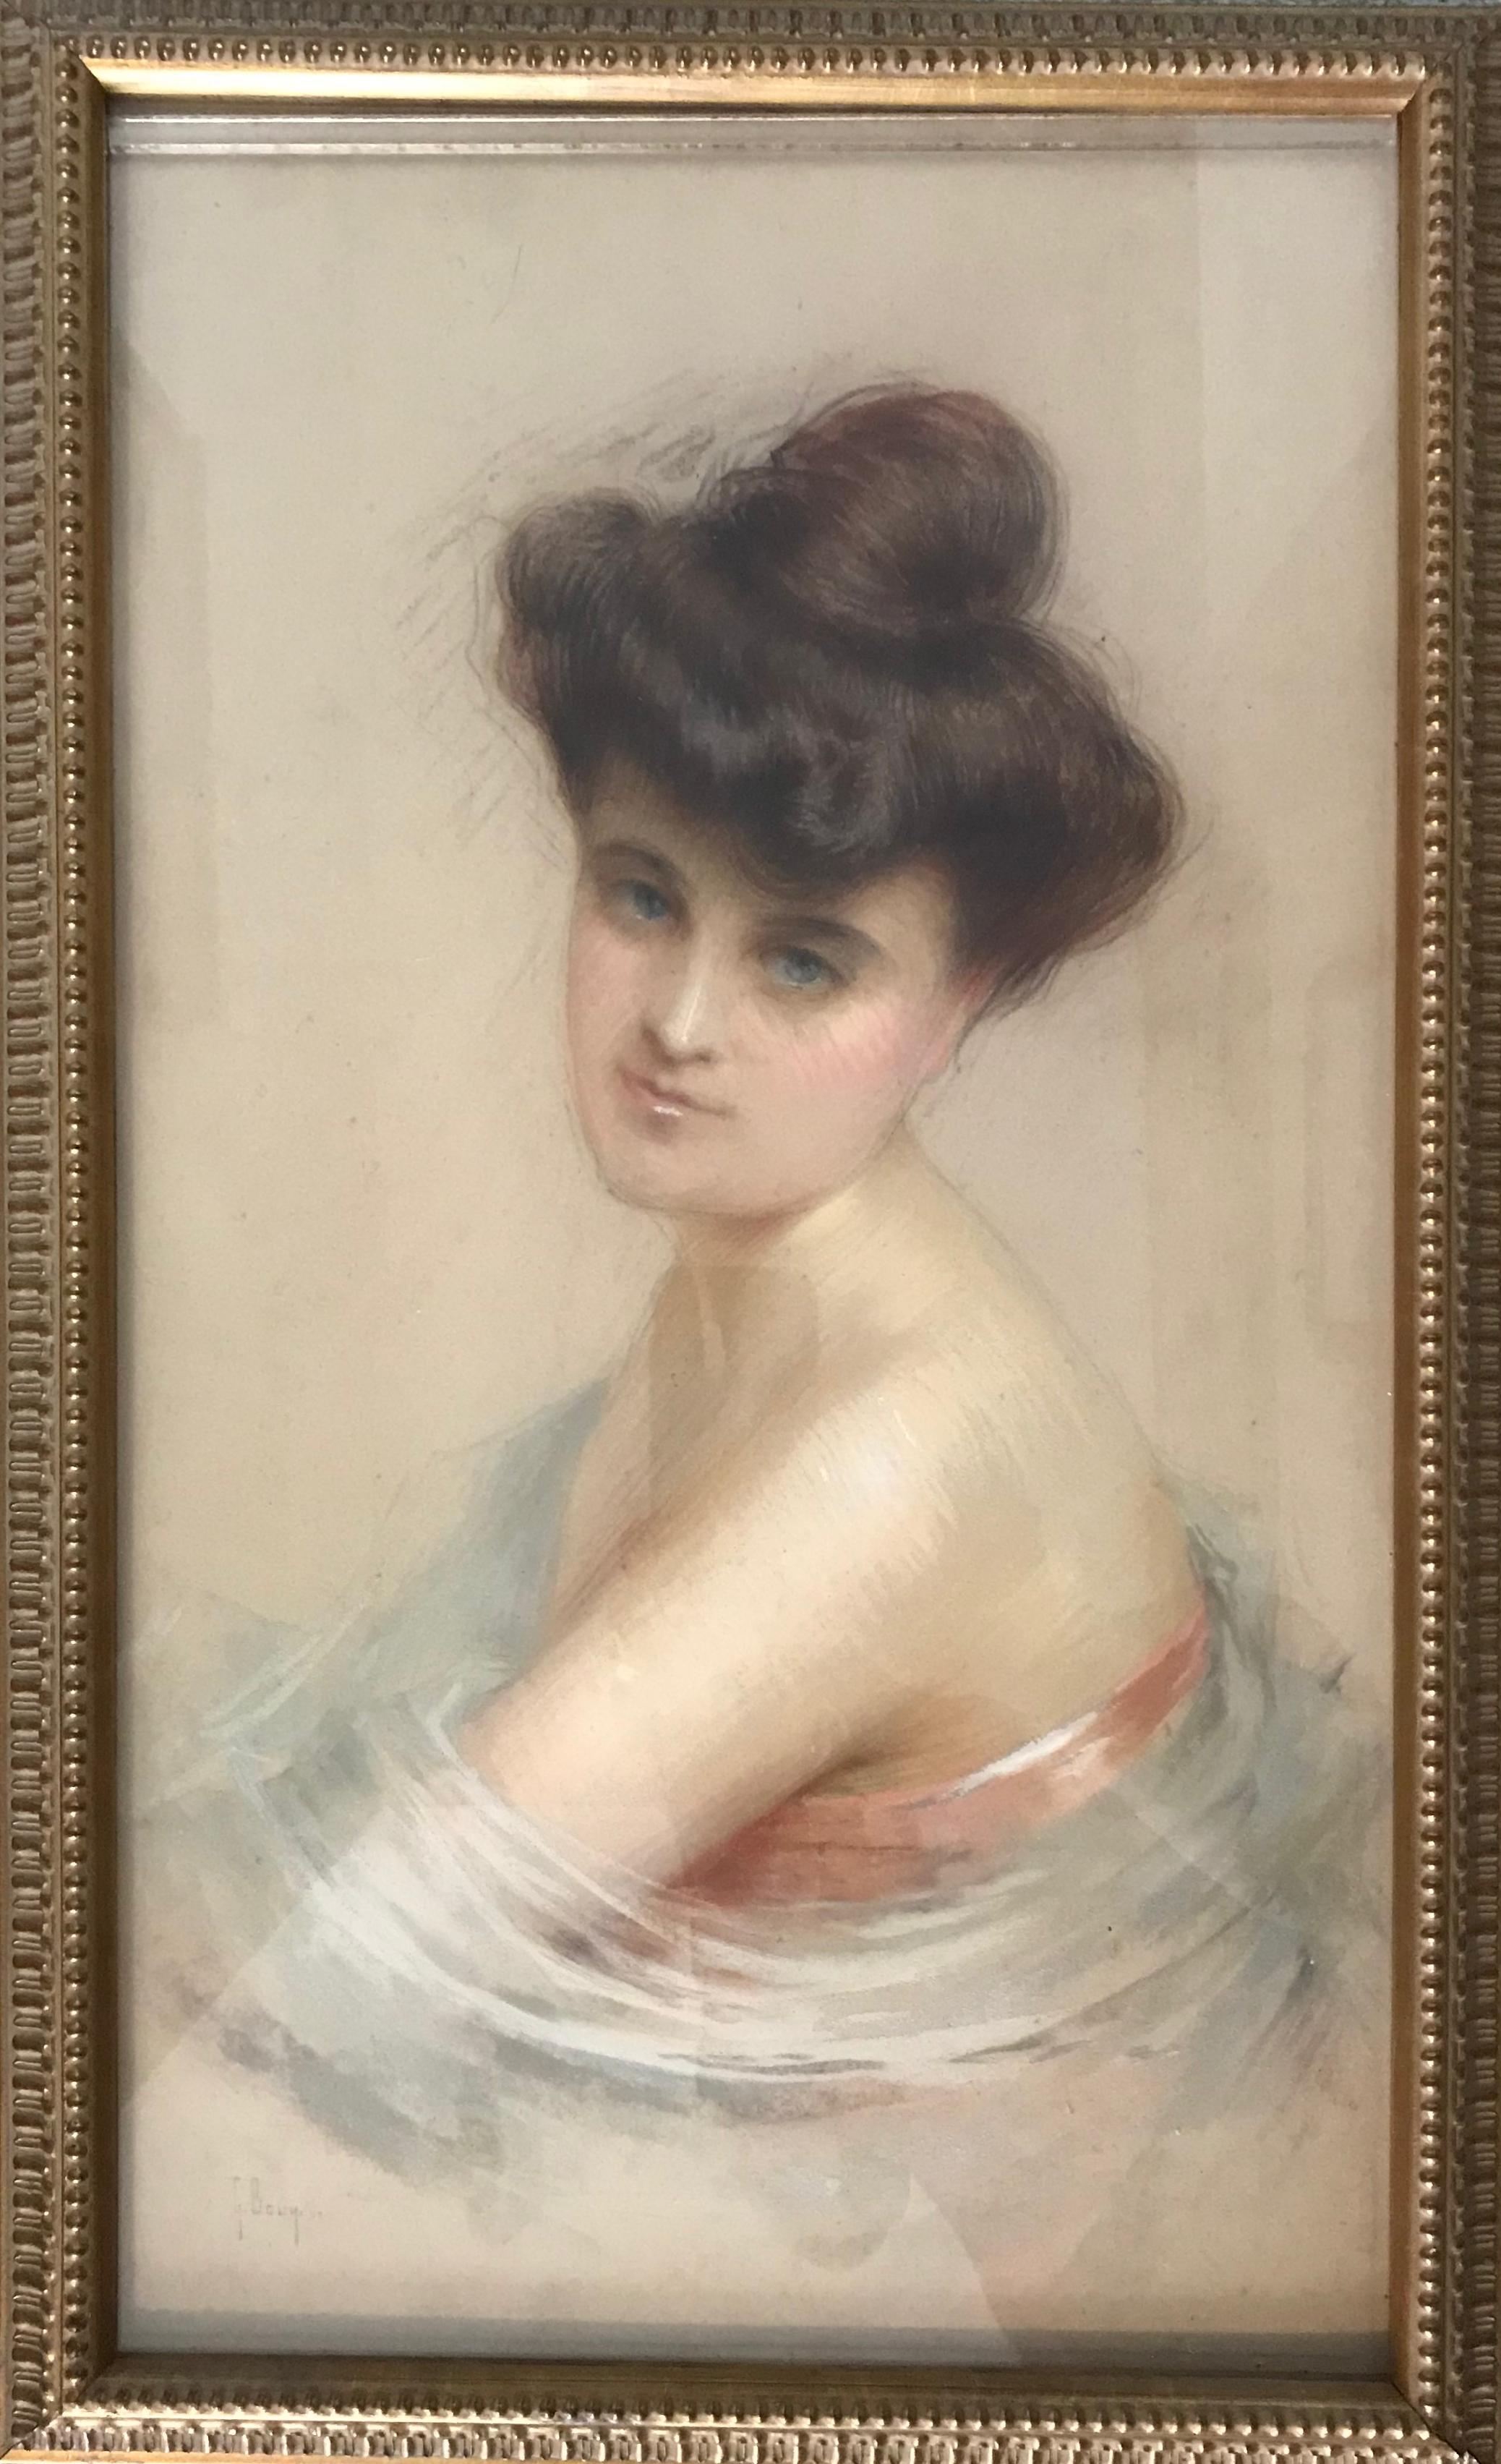 „“Demoiselle““ – gerahmtes pastellfarbenes Frauenporträt des frühen 20. Jahrhunderts